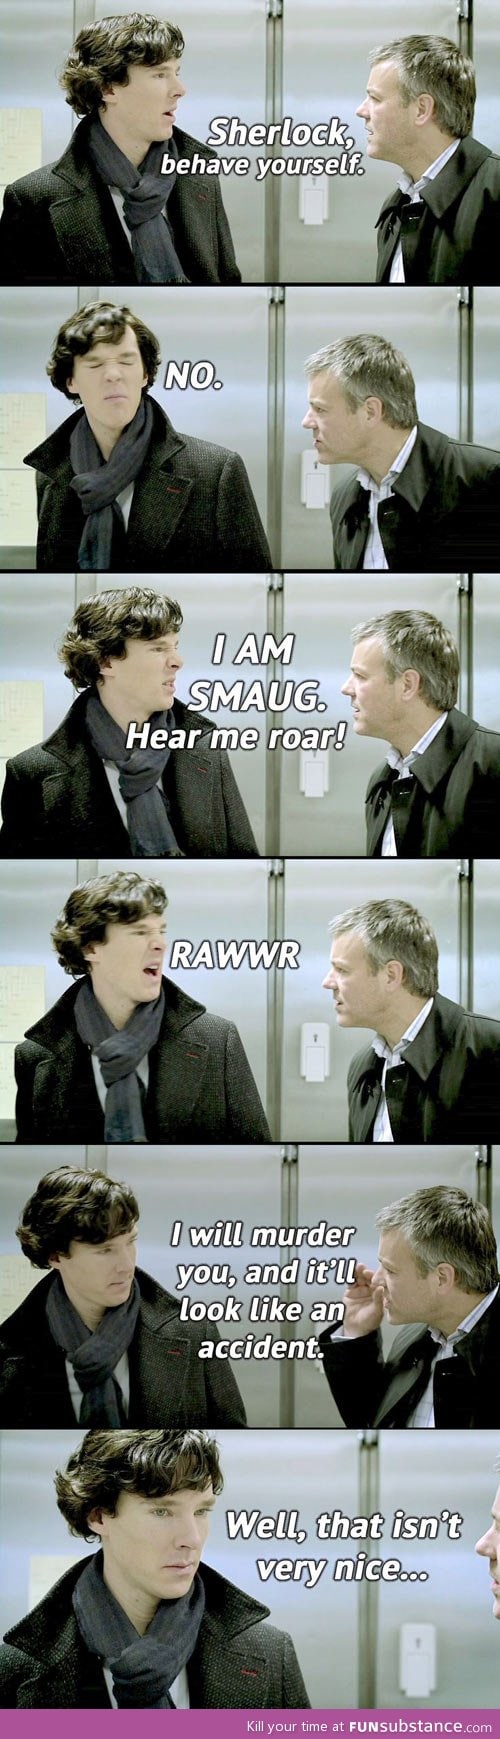 Sherlock, behave